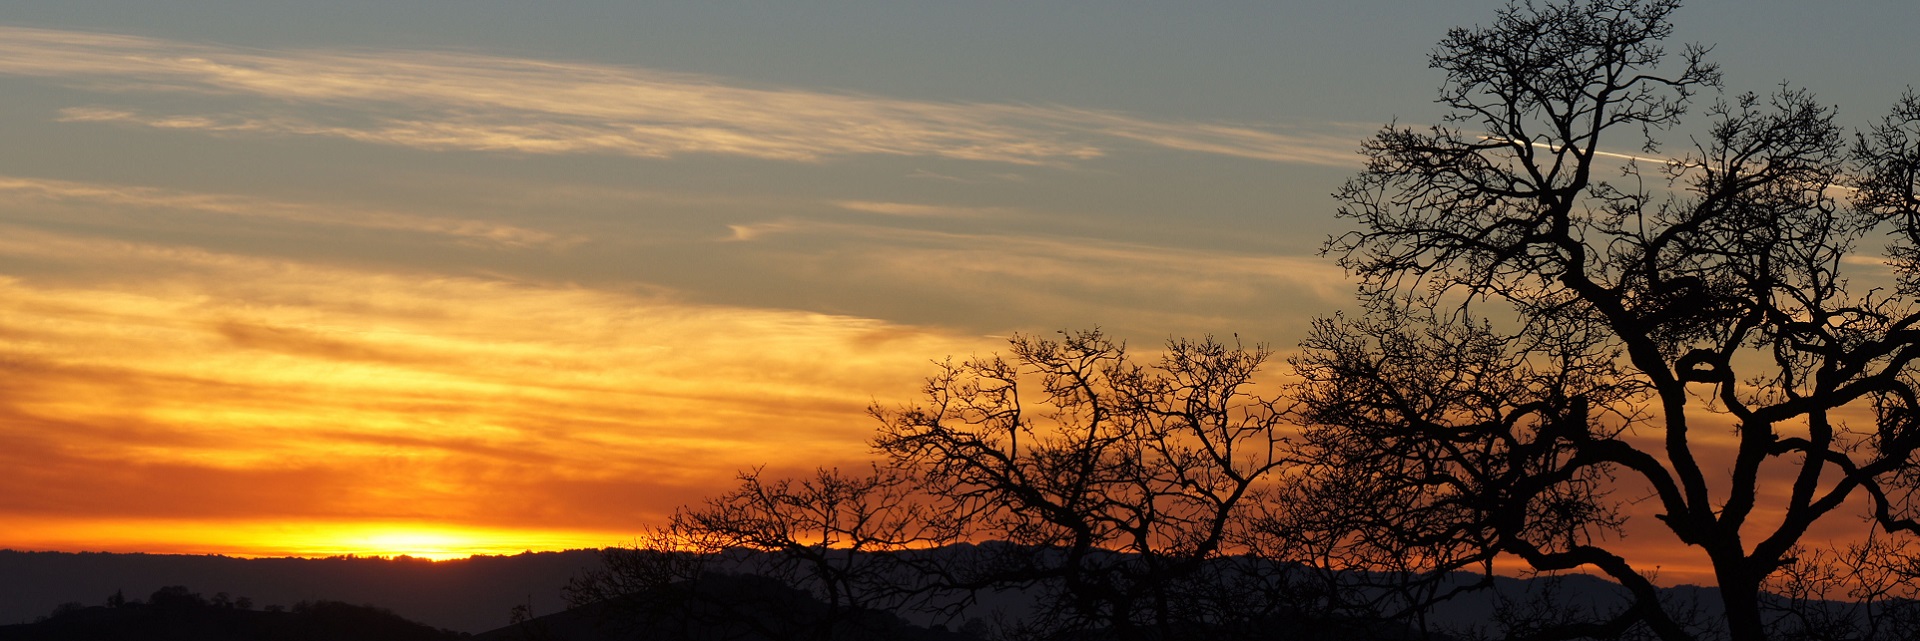 Oak Tree Silhouette Panoramic Sunset. Joseph D. Grant County Park, Santa Clara County, California, USA.